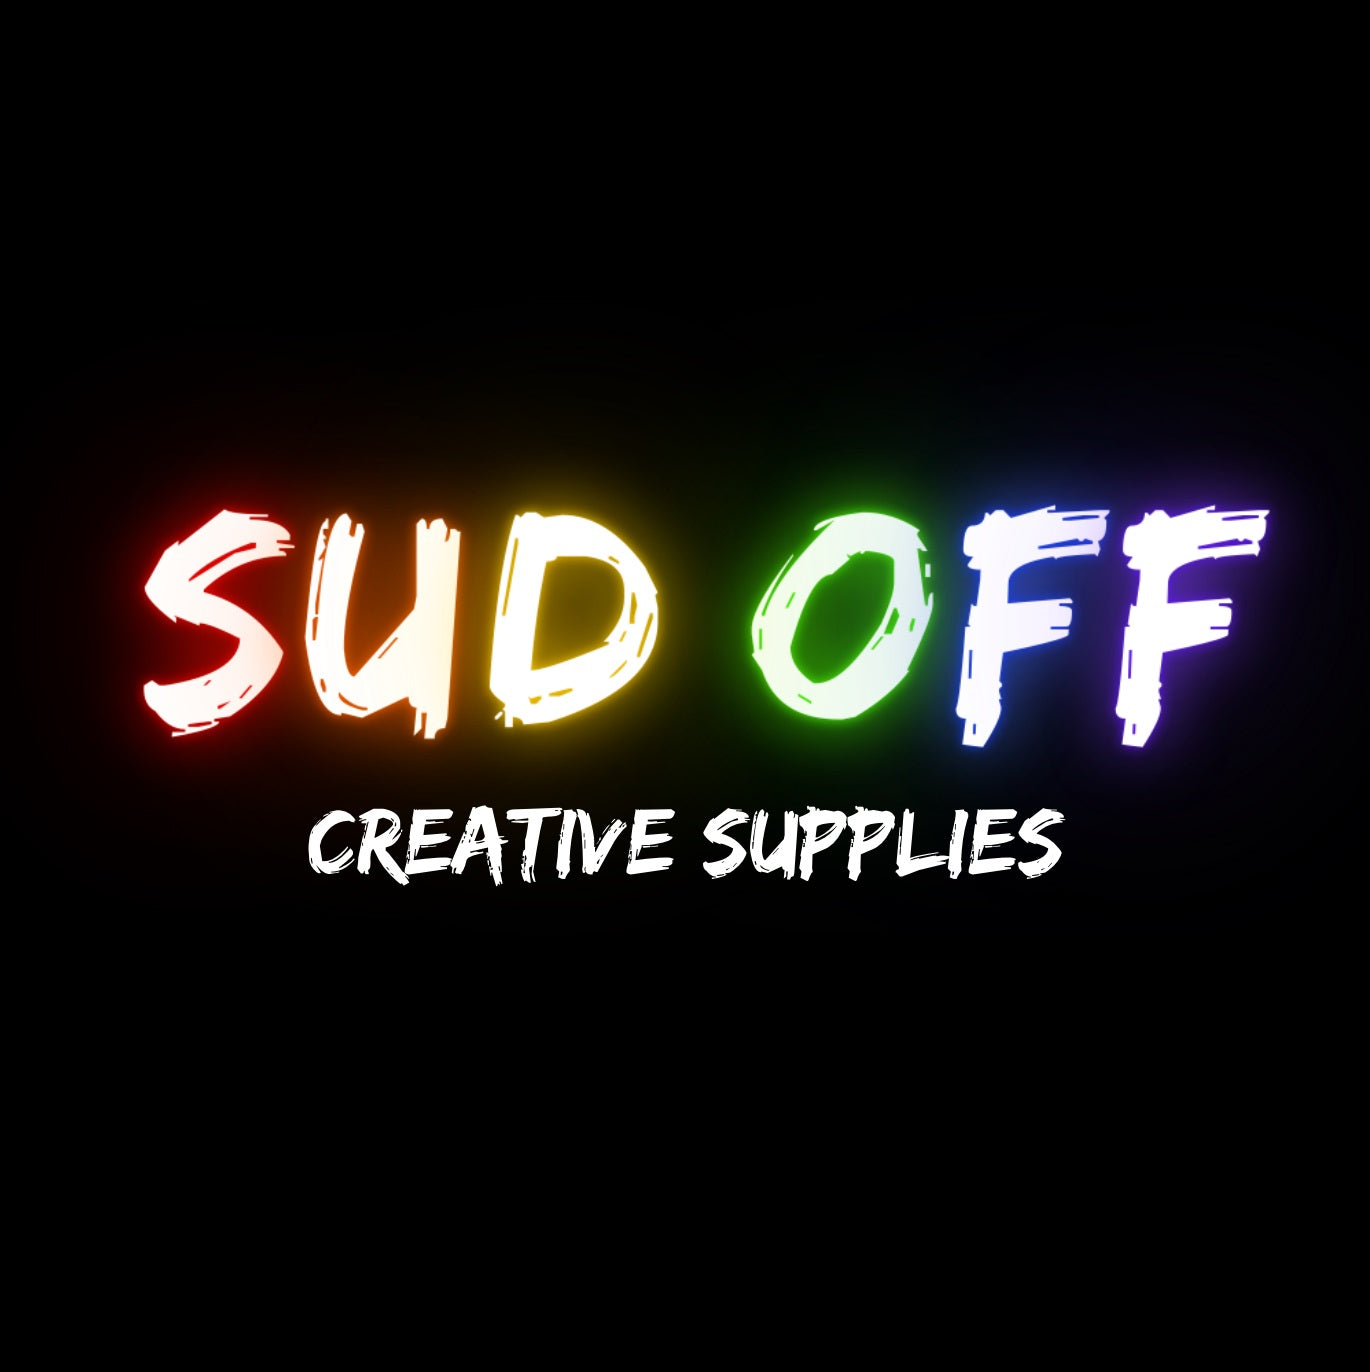 Sud Off! Creative Supplies